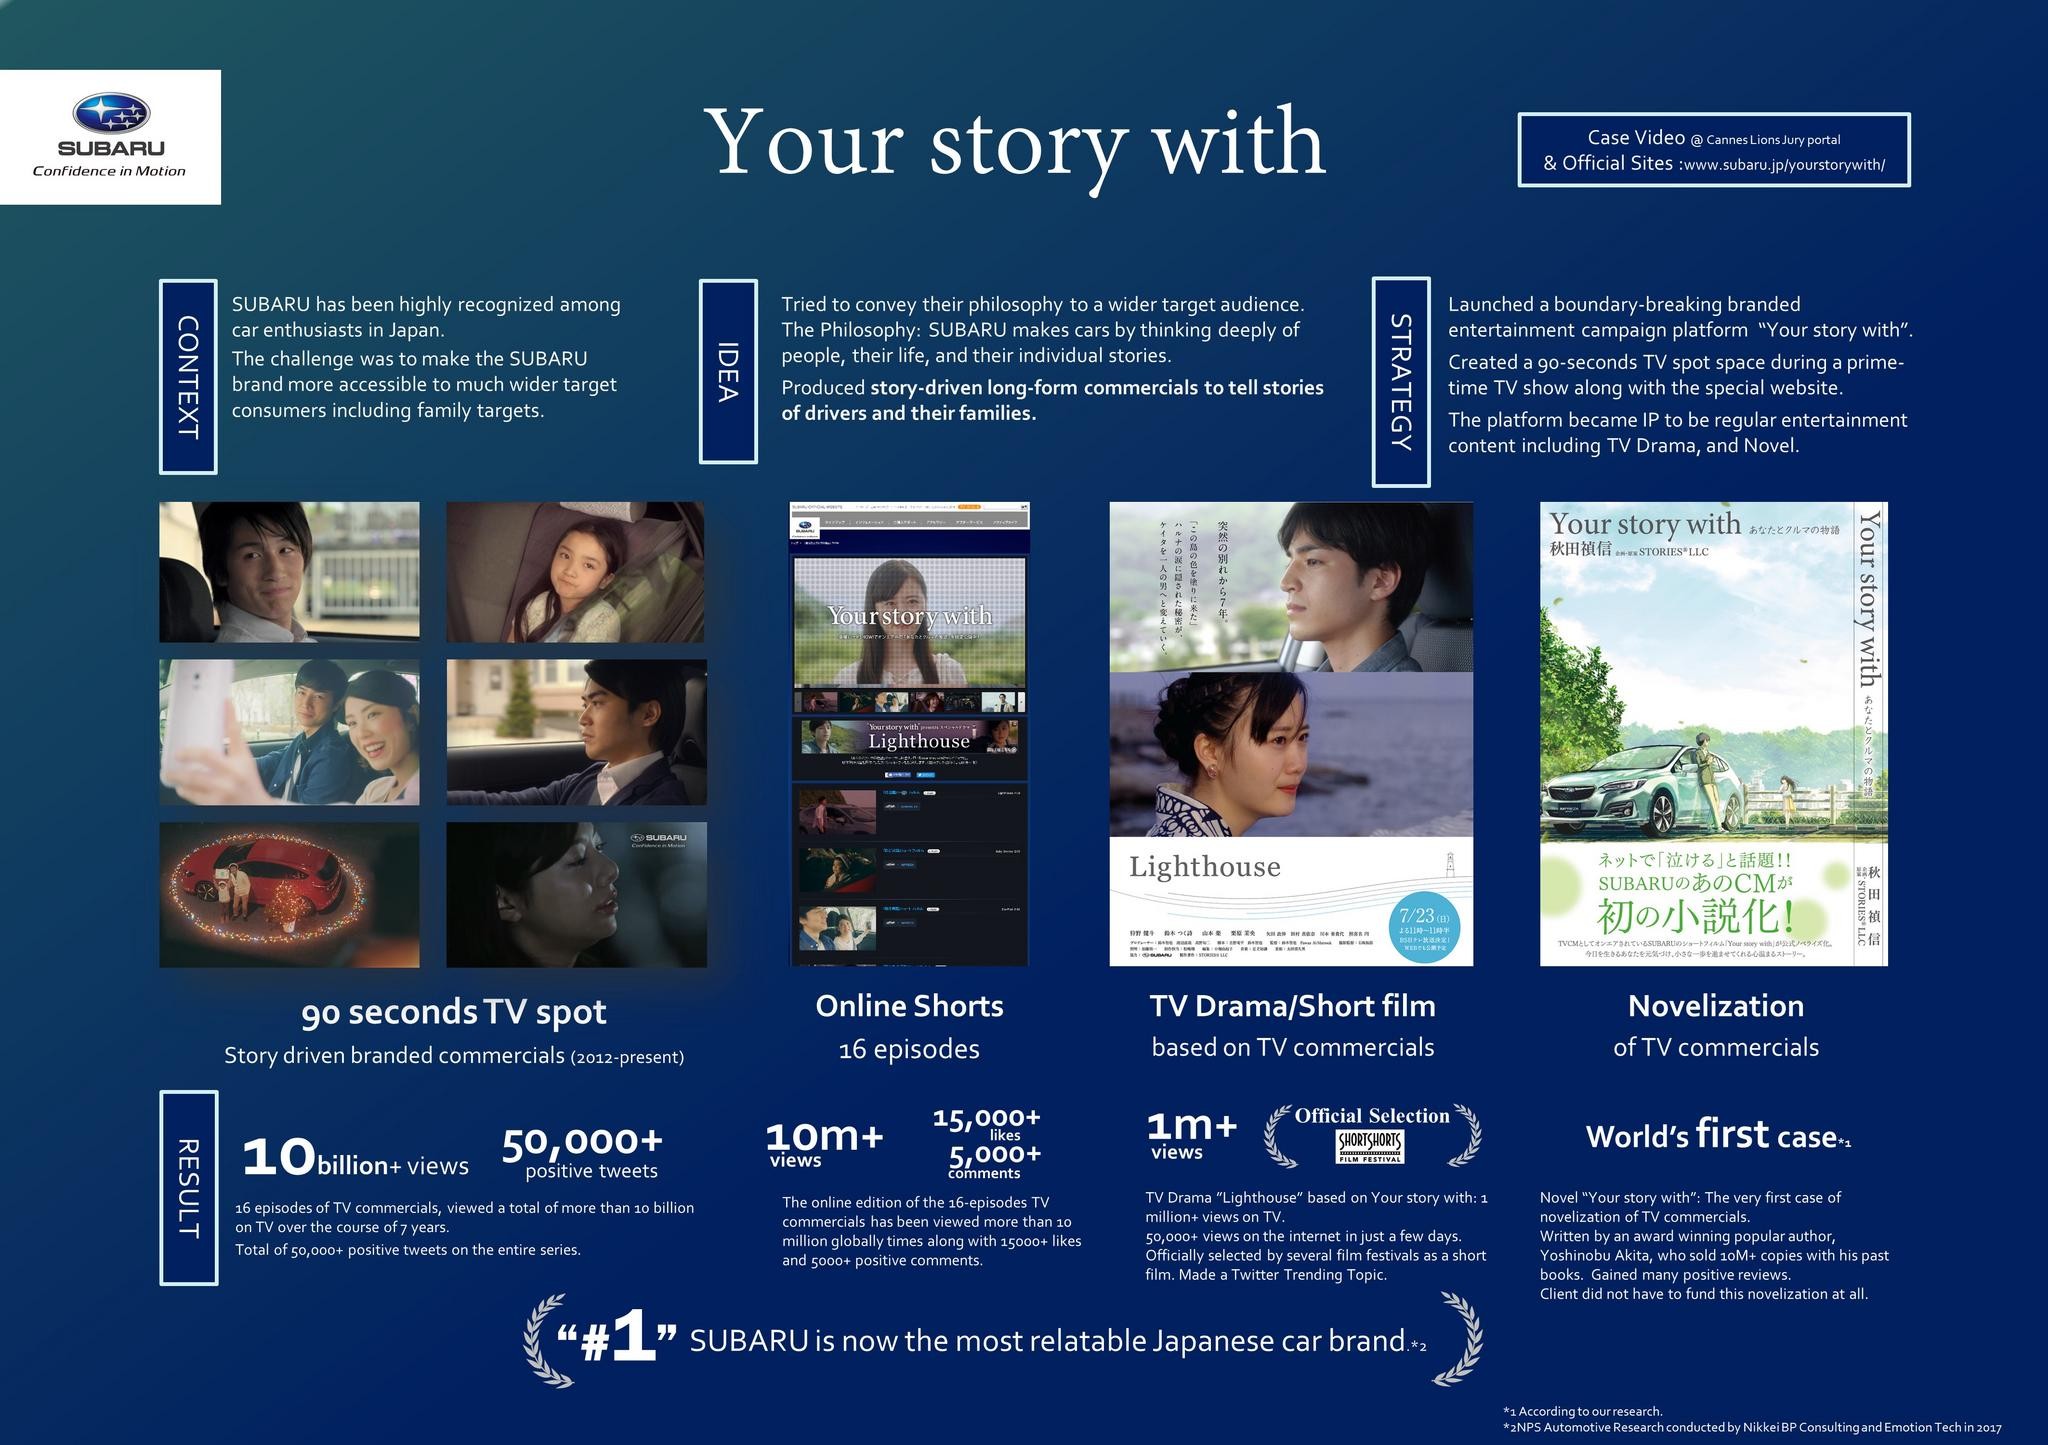 SUBARU -Your story with- TV Dramas / Short Films/ Novel based on TV commercials